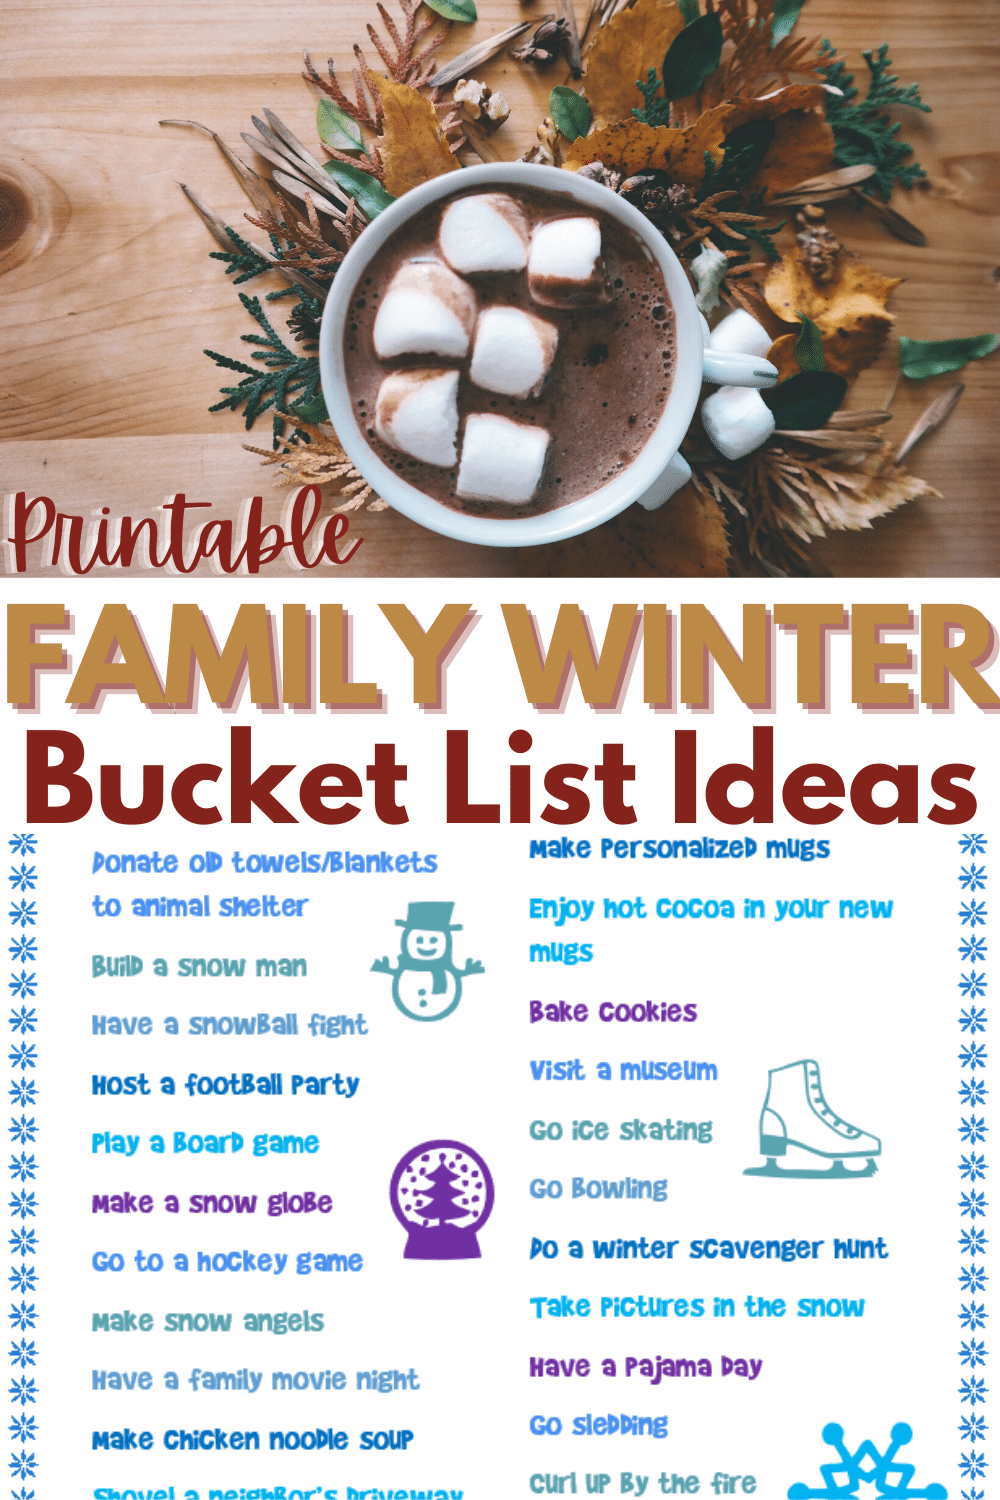 This printable family winter bucket list is full of awesome ideas the whole family will enjoy! #familyfun #winteractivities #bucketlist via @wondermomwannab